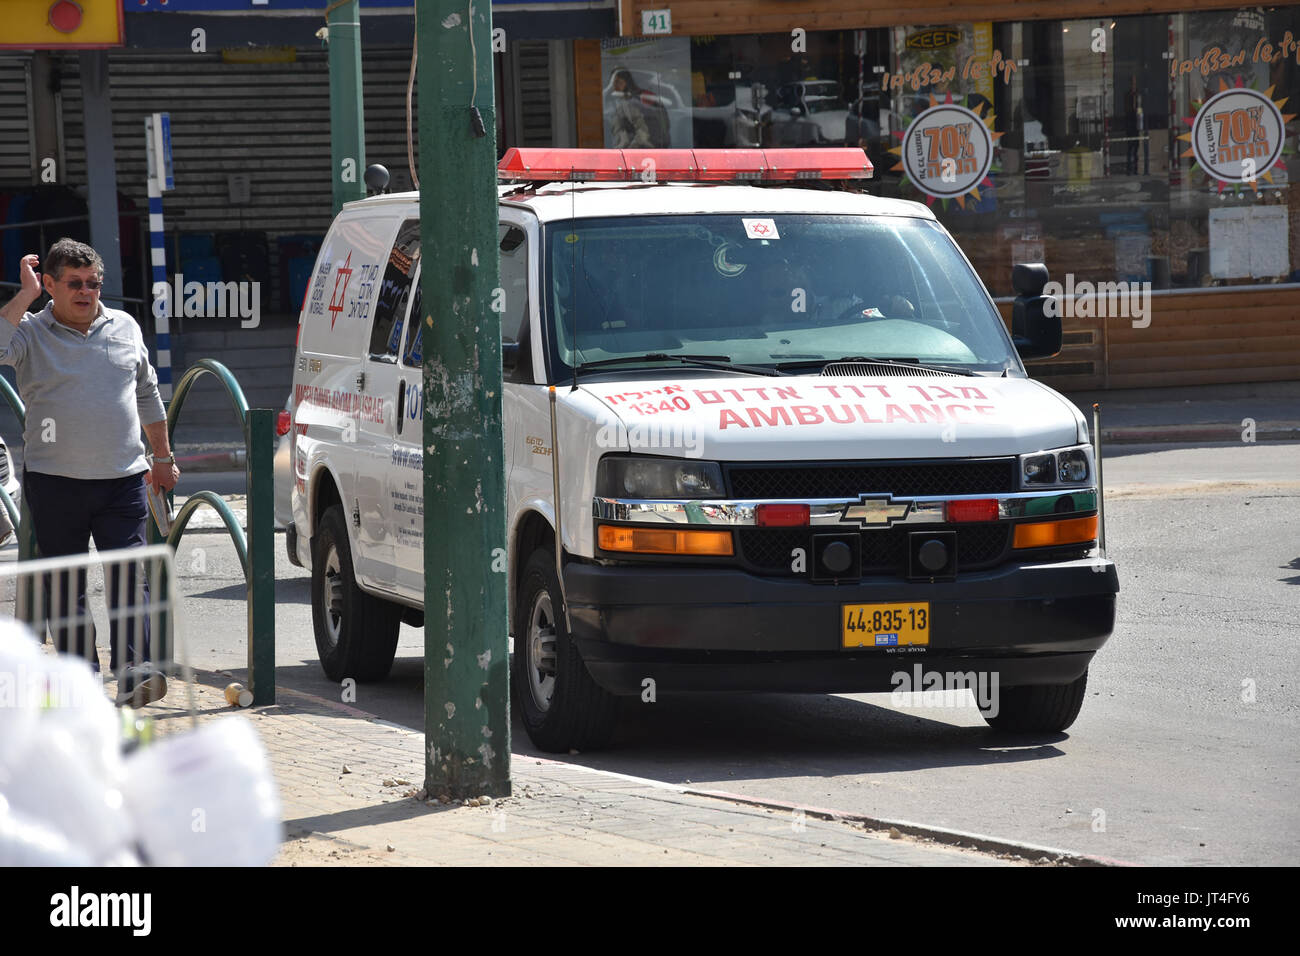 Ambulanza van in Israele Foto Stock